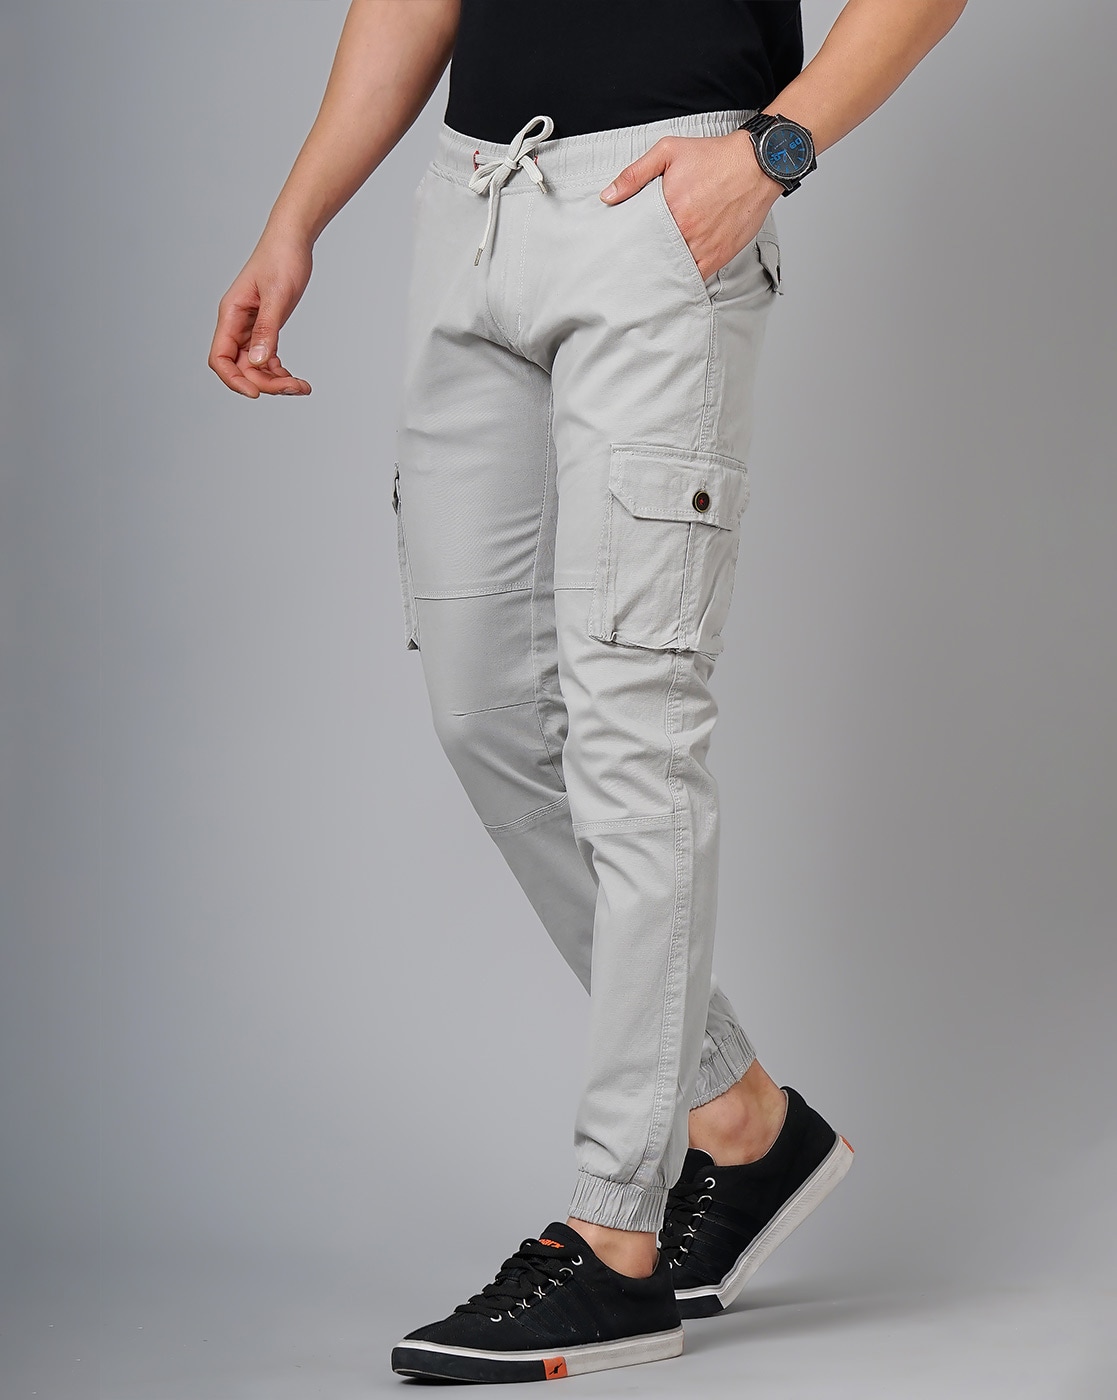 Columbia Pants  Buy Columbia Men Brown Na Silver Ridge Convertible Pant  Set of 2Online  Nykaa Fashion